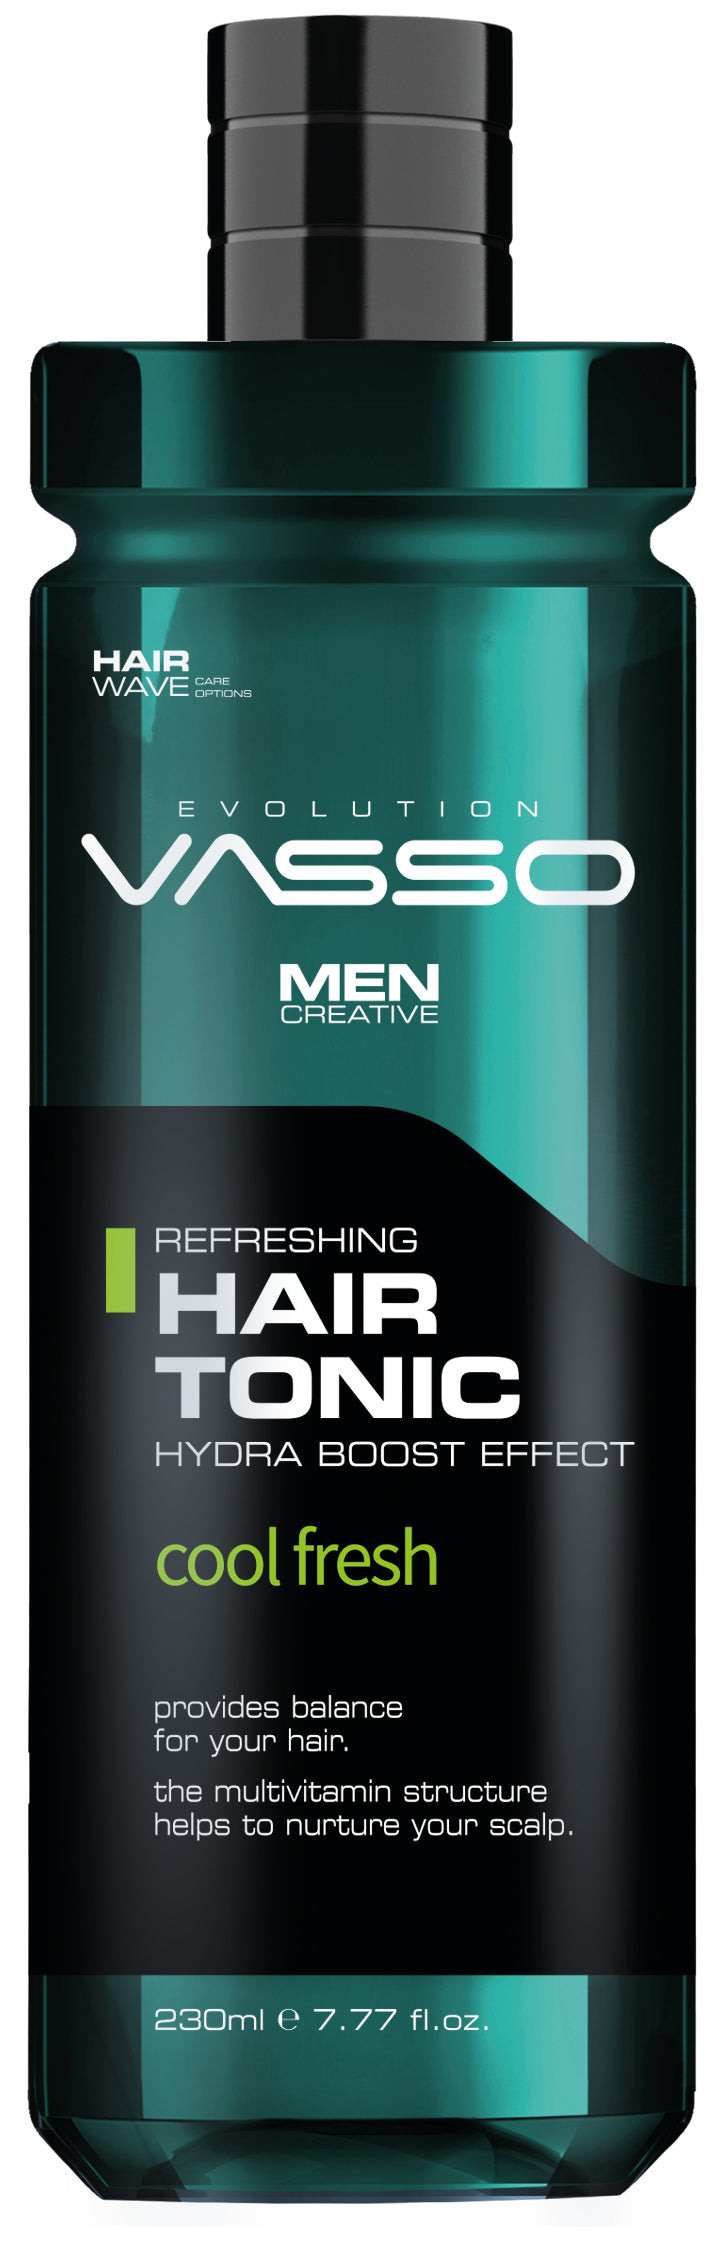 VASSO HAIR TONIC - Cool Fresh